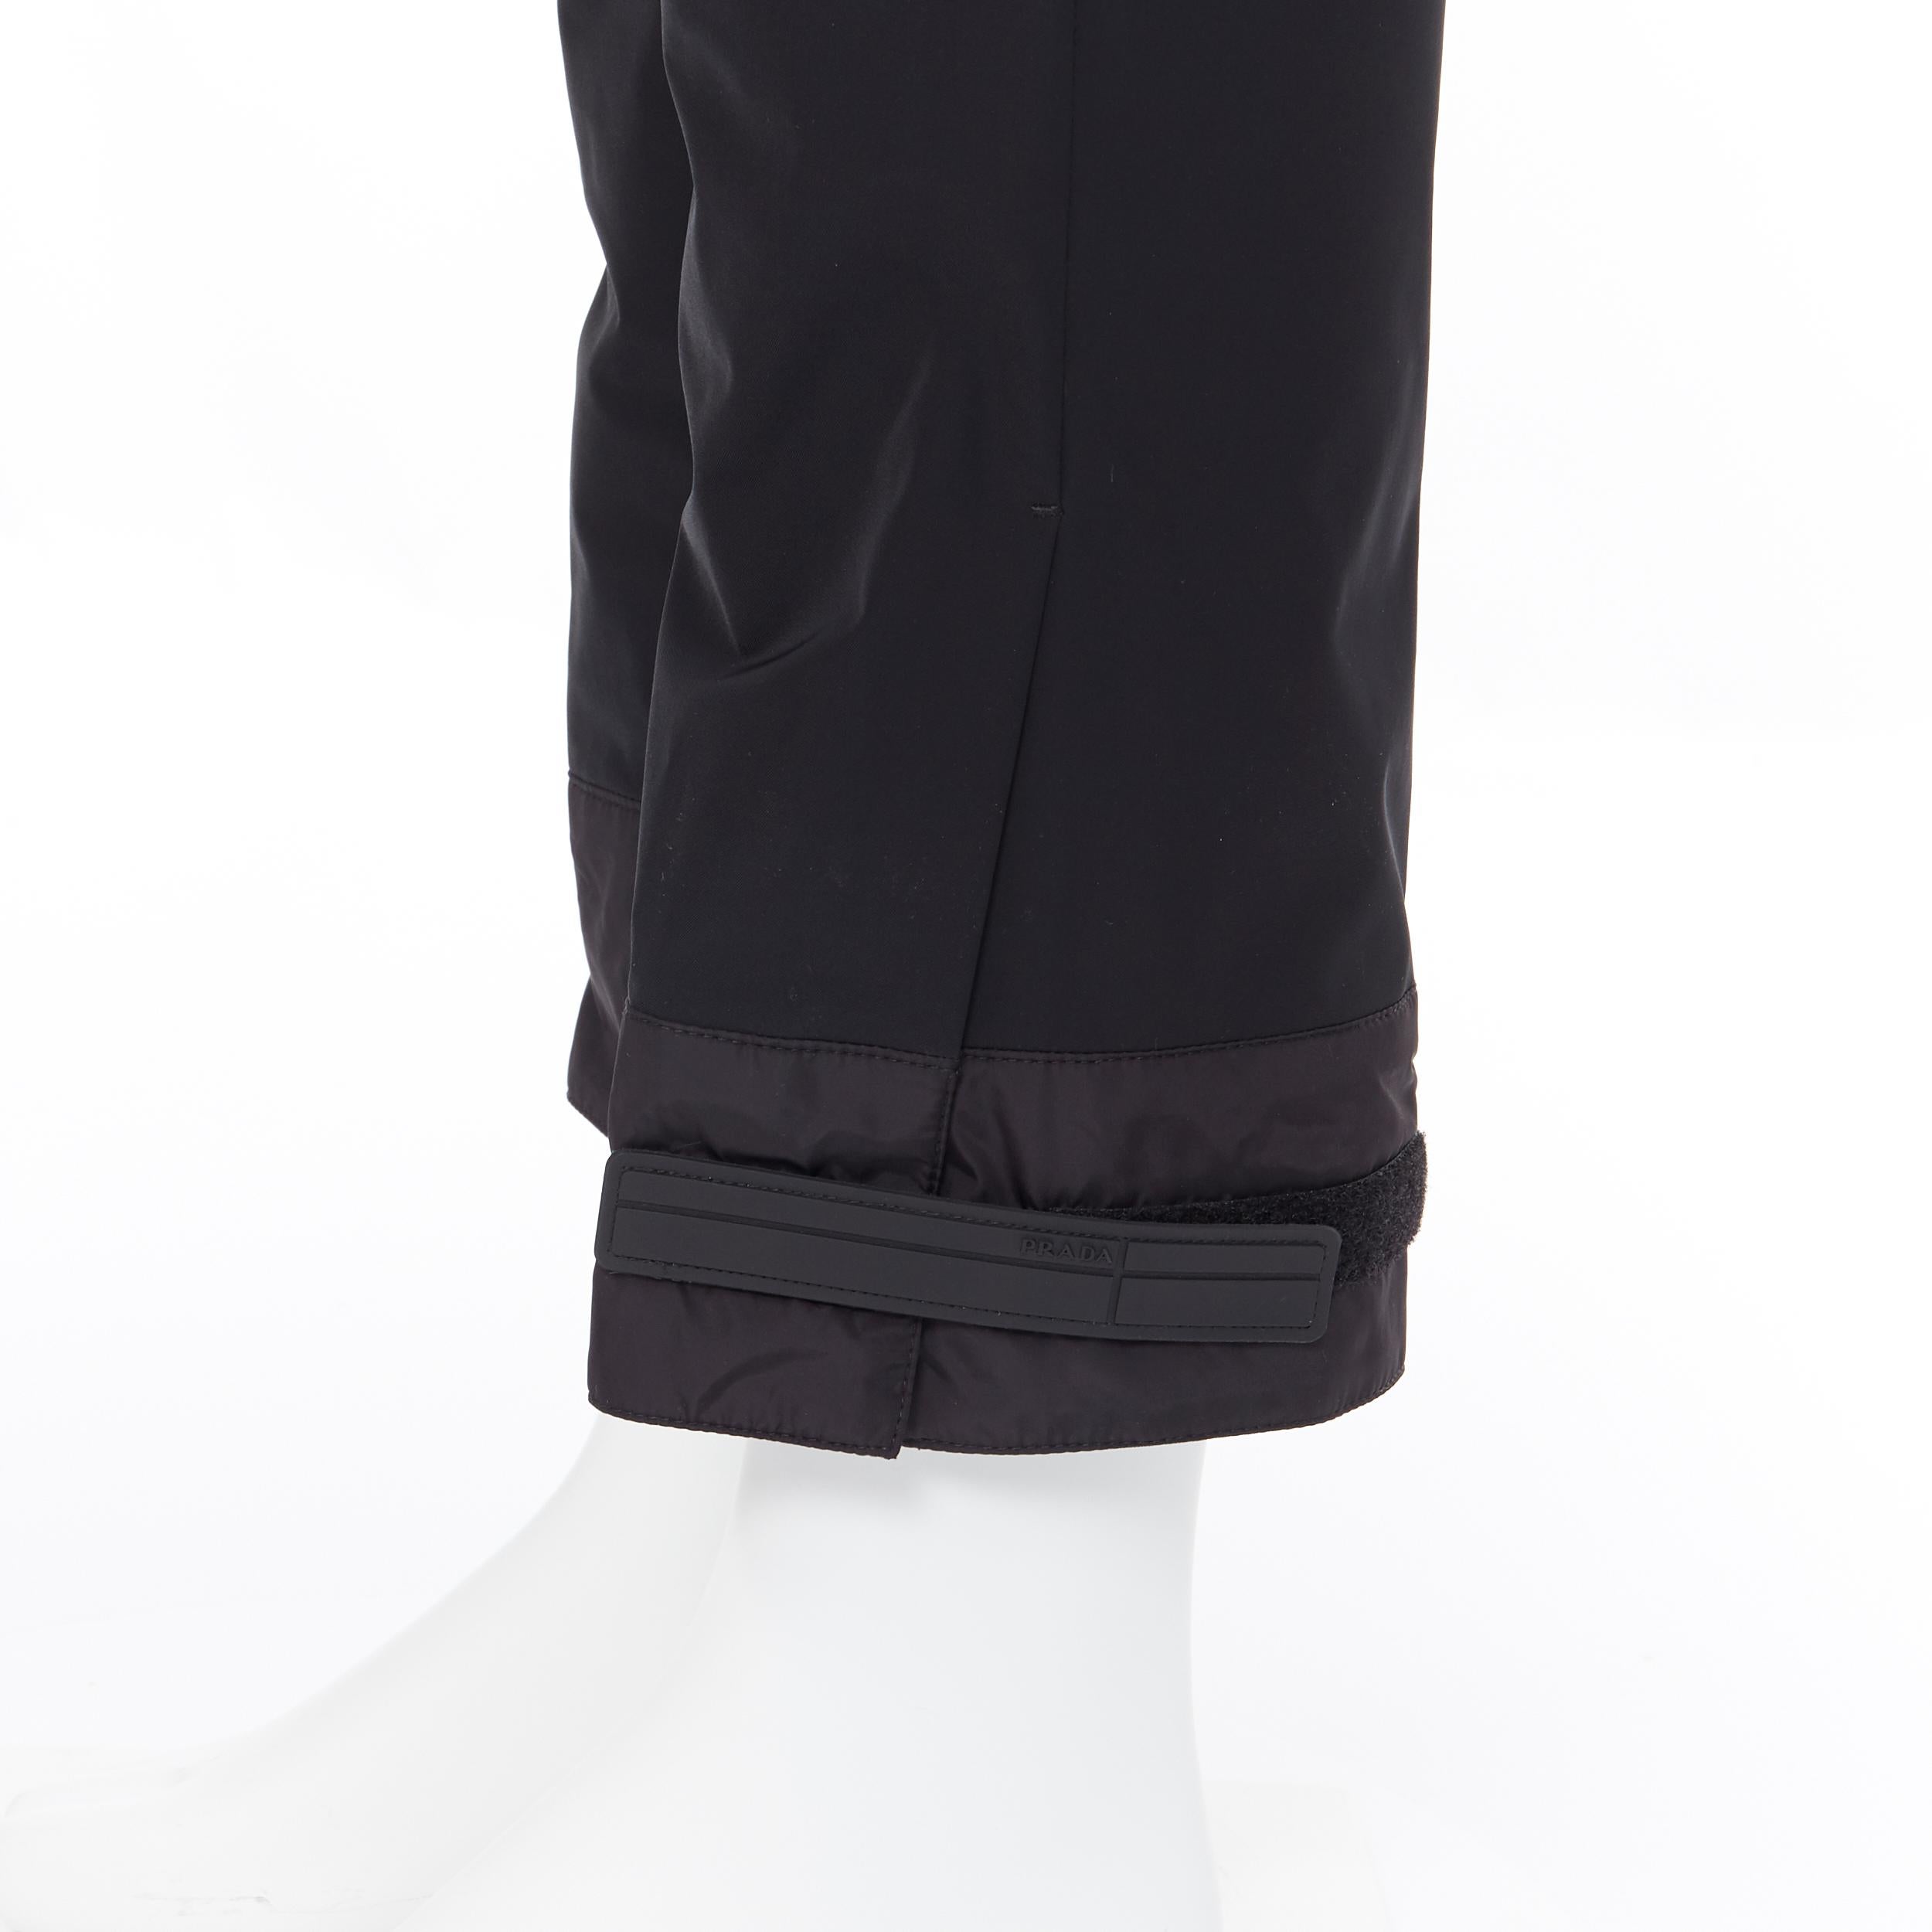 new PRADA 2018 black sportswear logo cuff hem track pants trousers IT48 M
Brand: Prada
Designer: Miuccia Prada
Collection: Fall Winter 2018
Model Name / Style: Cuff trousers 
Material: Polyester
Color: Black
Pattern: Solid
Closure: Zip
Extra Detail: